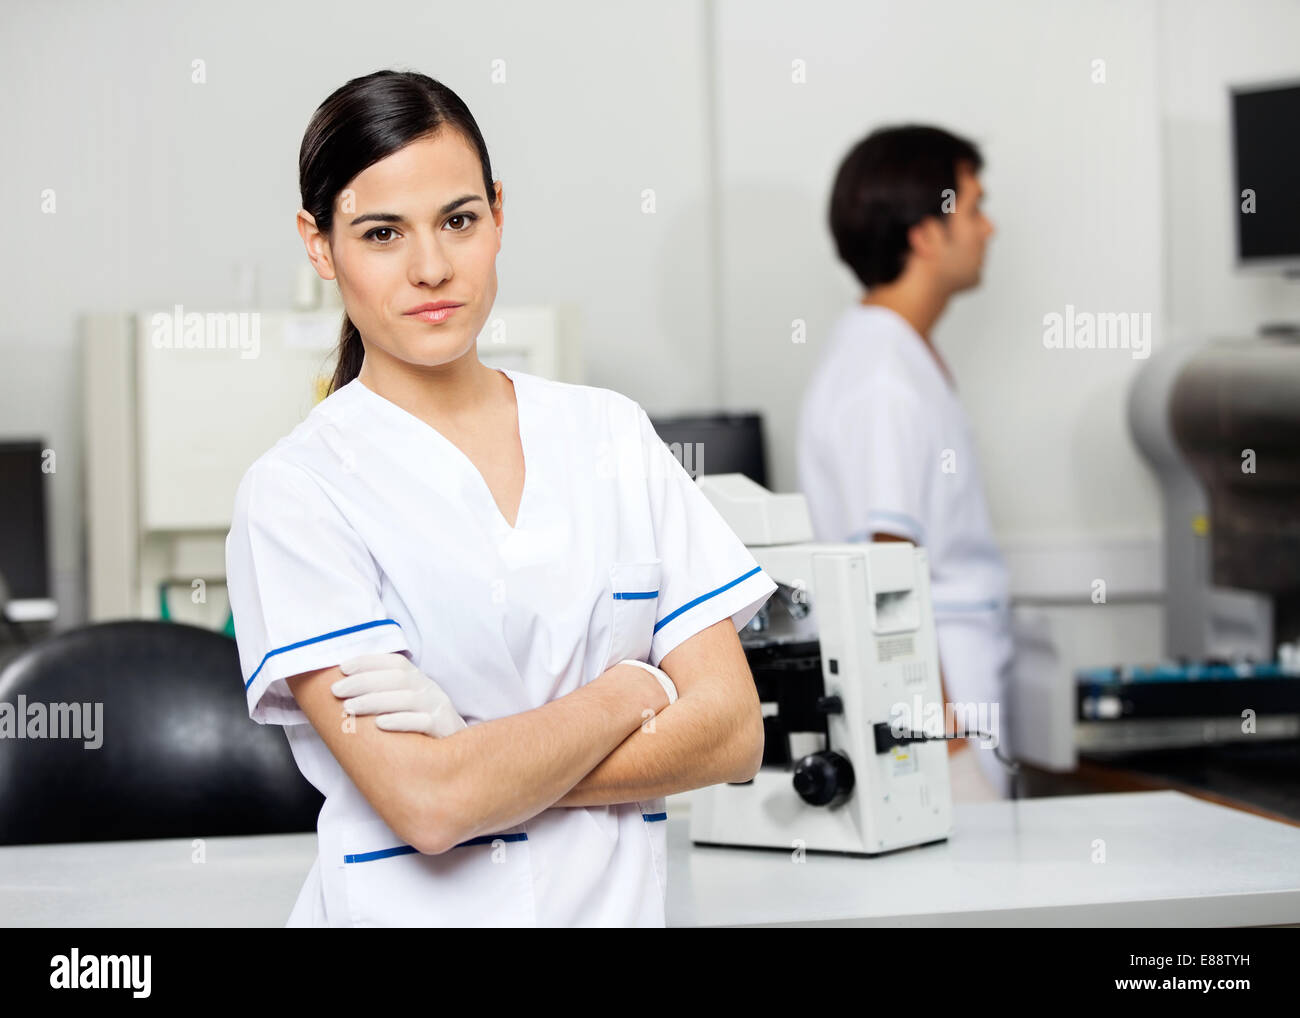 Confident female scientist in laboratory Banque D'Images